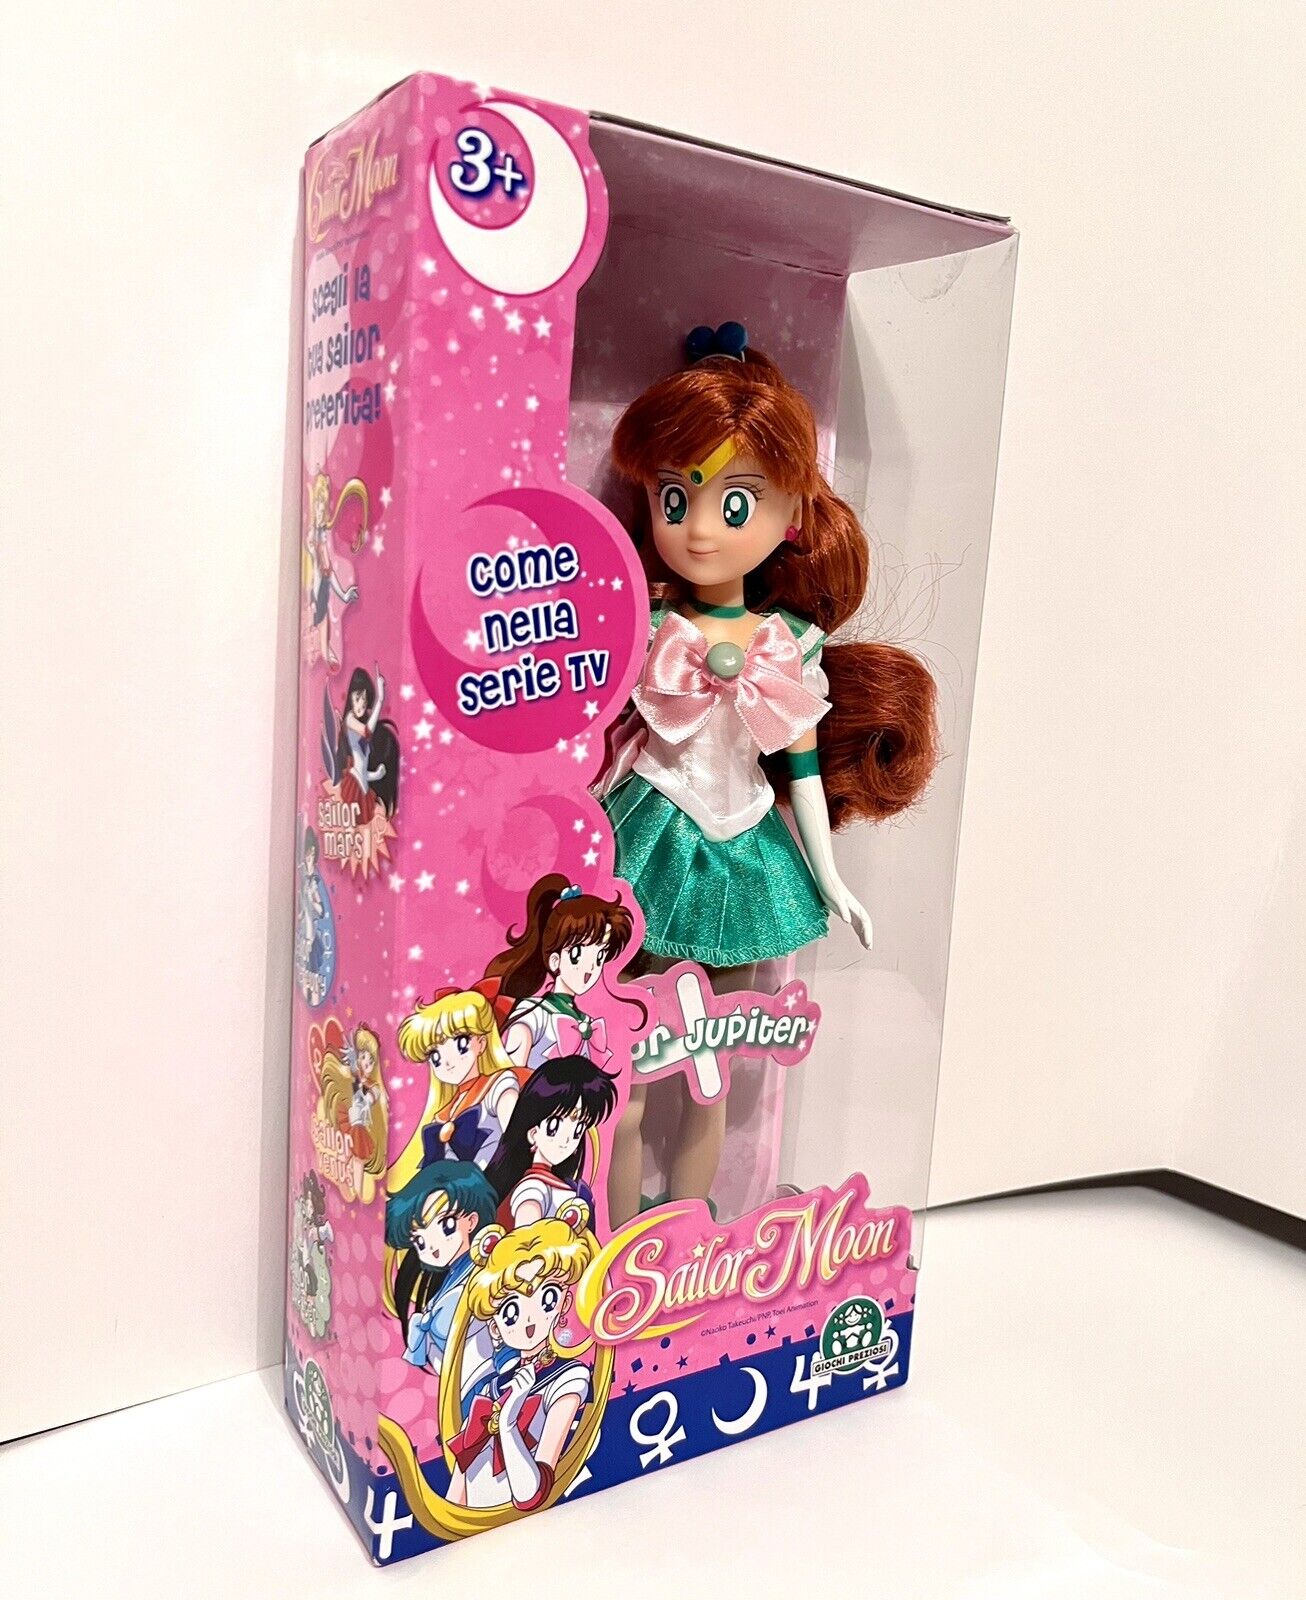 2011 Sailor Moon Italian Doll Giochi Preziosi - Sailor Jupiter